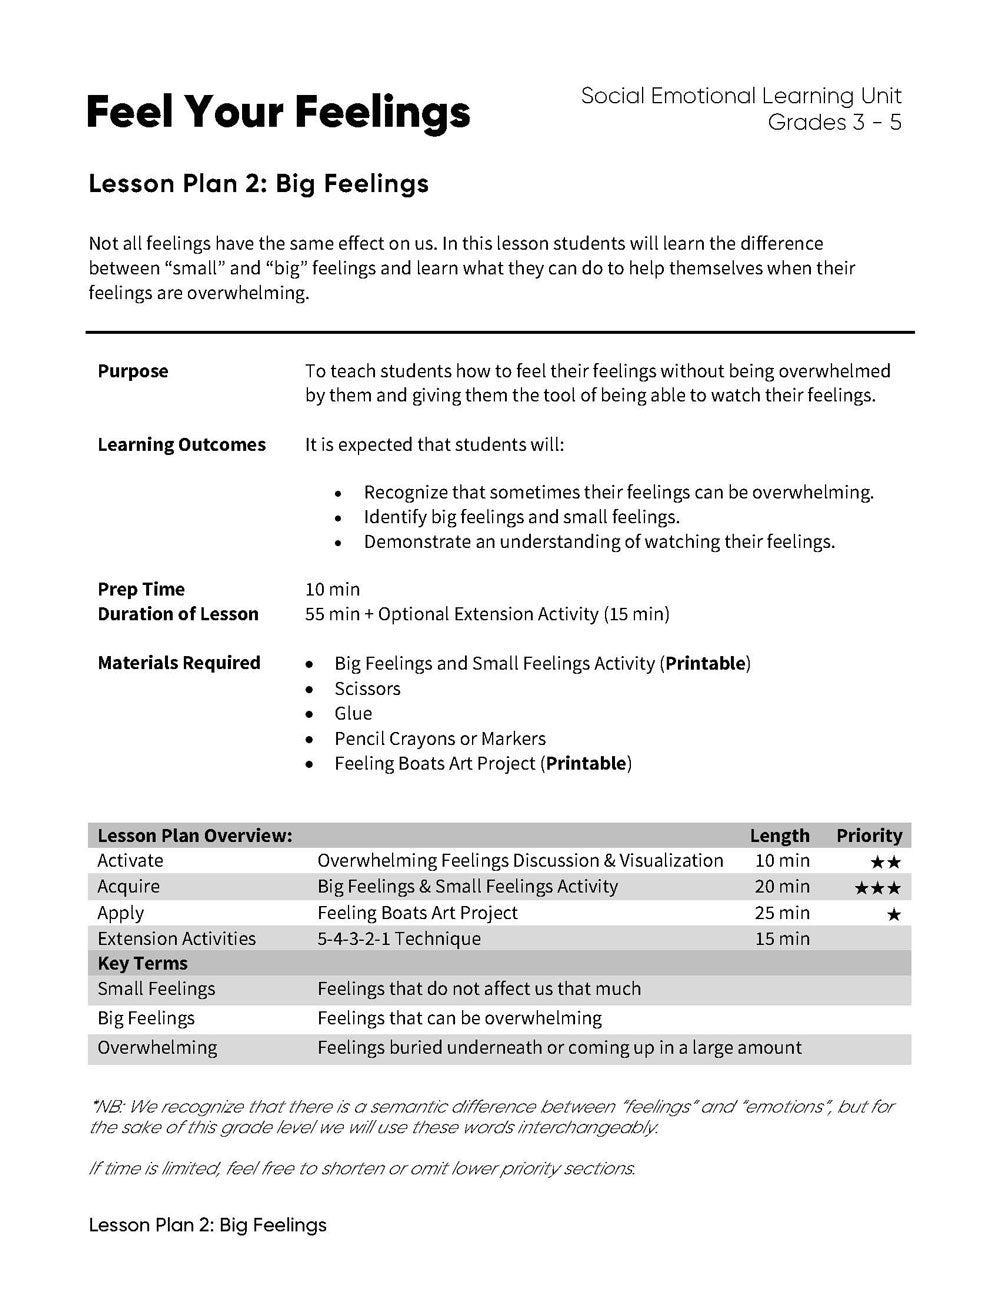 Feel Your Feelings - Lesson Plan Bundle (4 Lesson Plans)